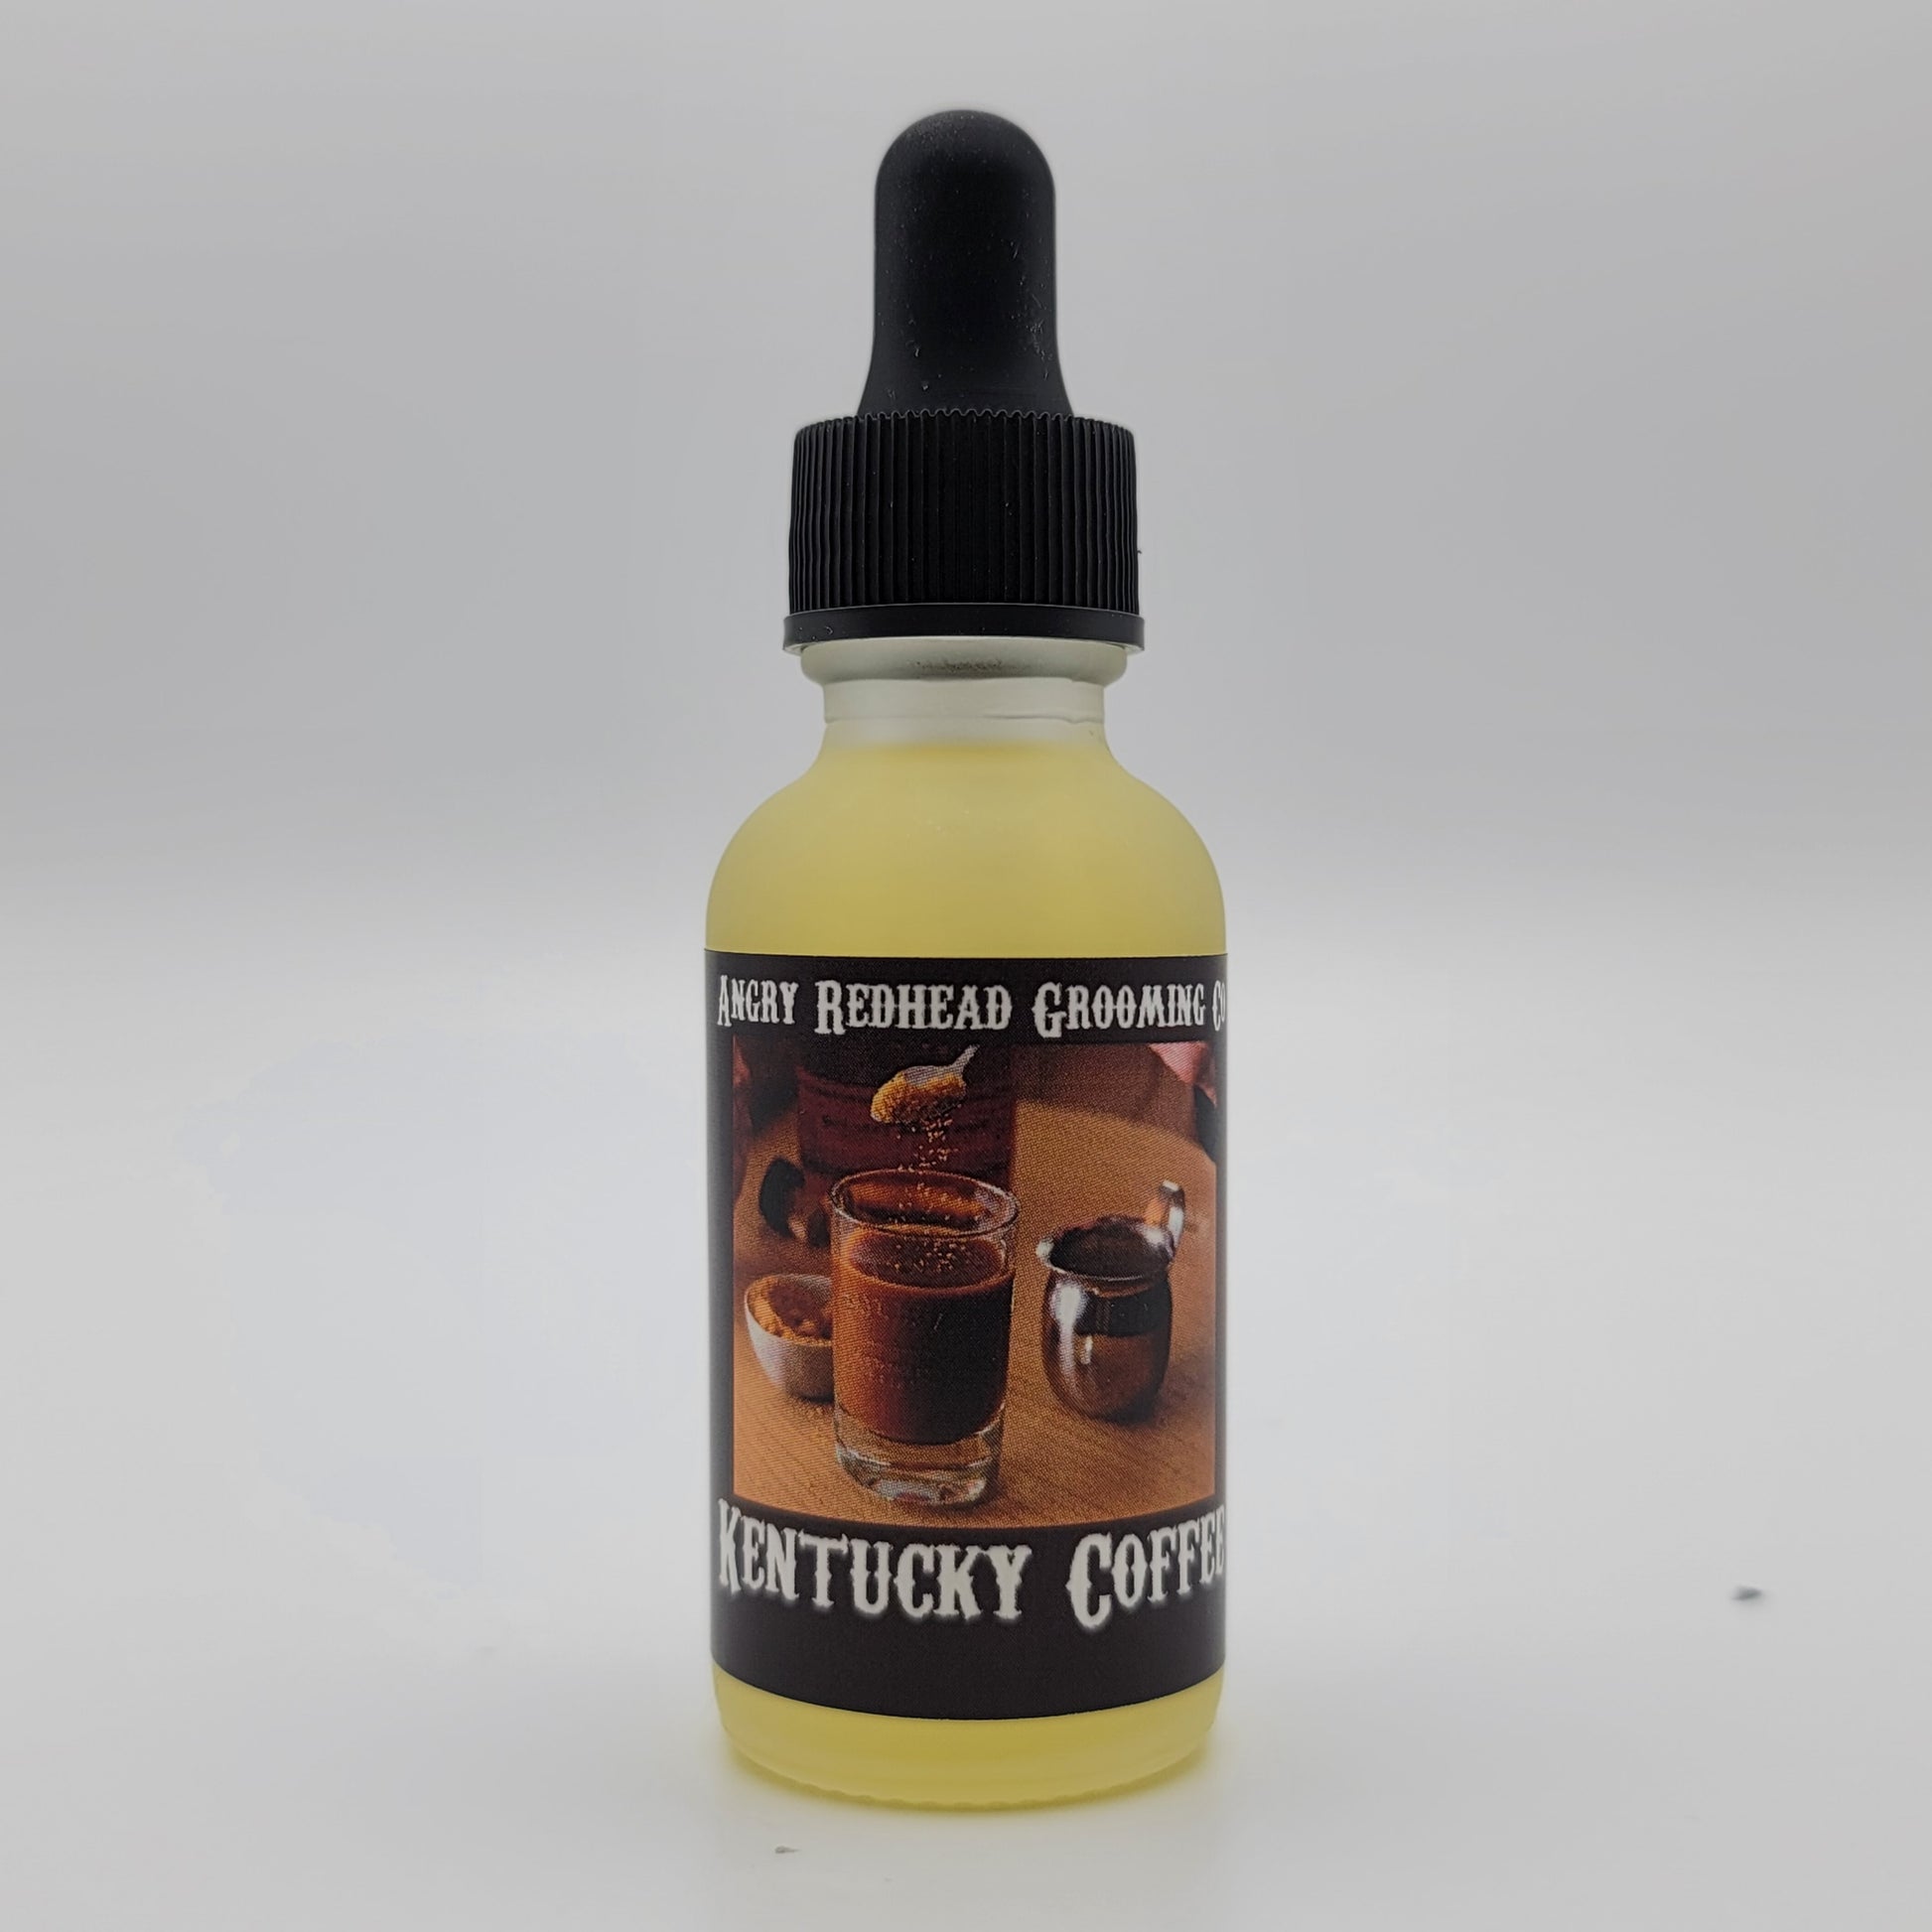 Kentucky Coffee Hair Oil by Angry Redhead Grooming Co - angryredheadgrooming.com